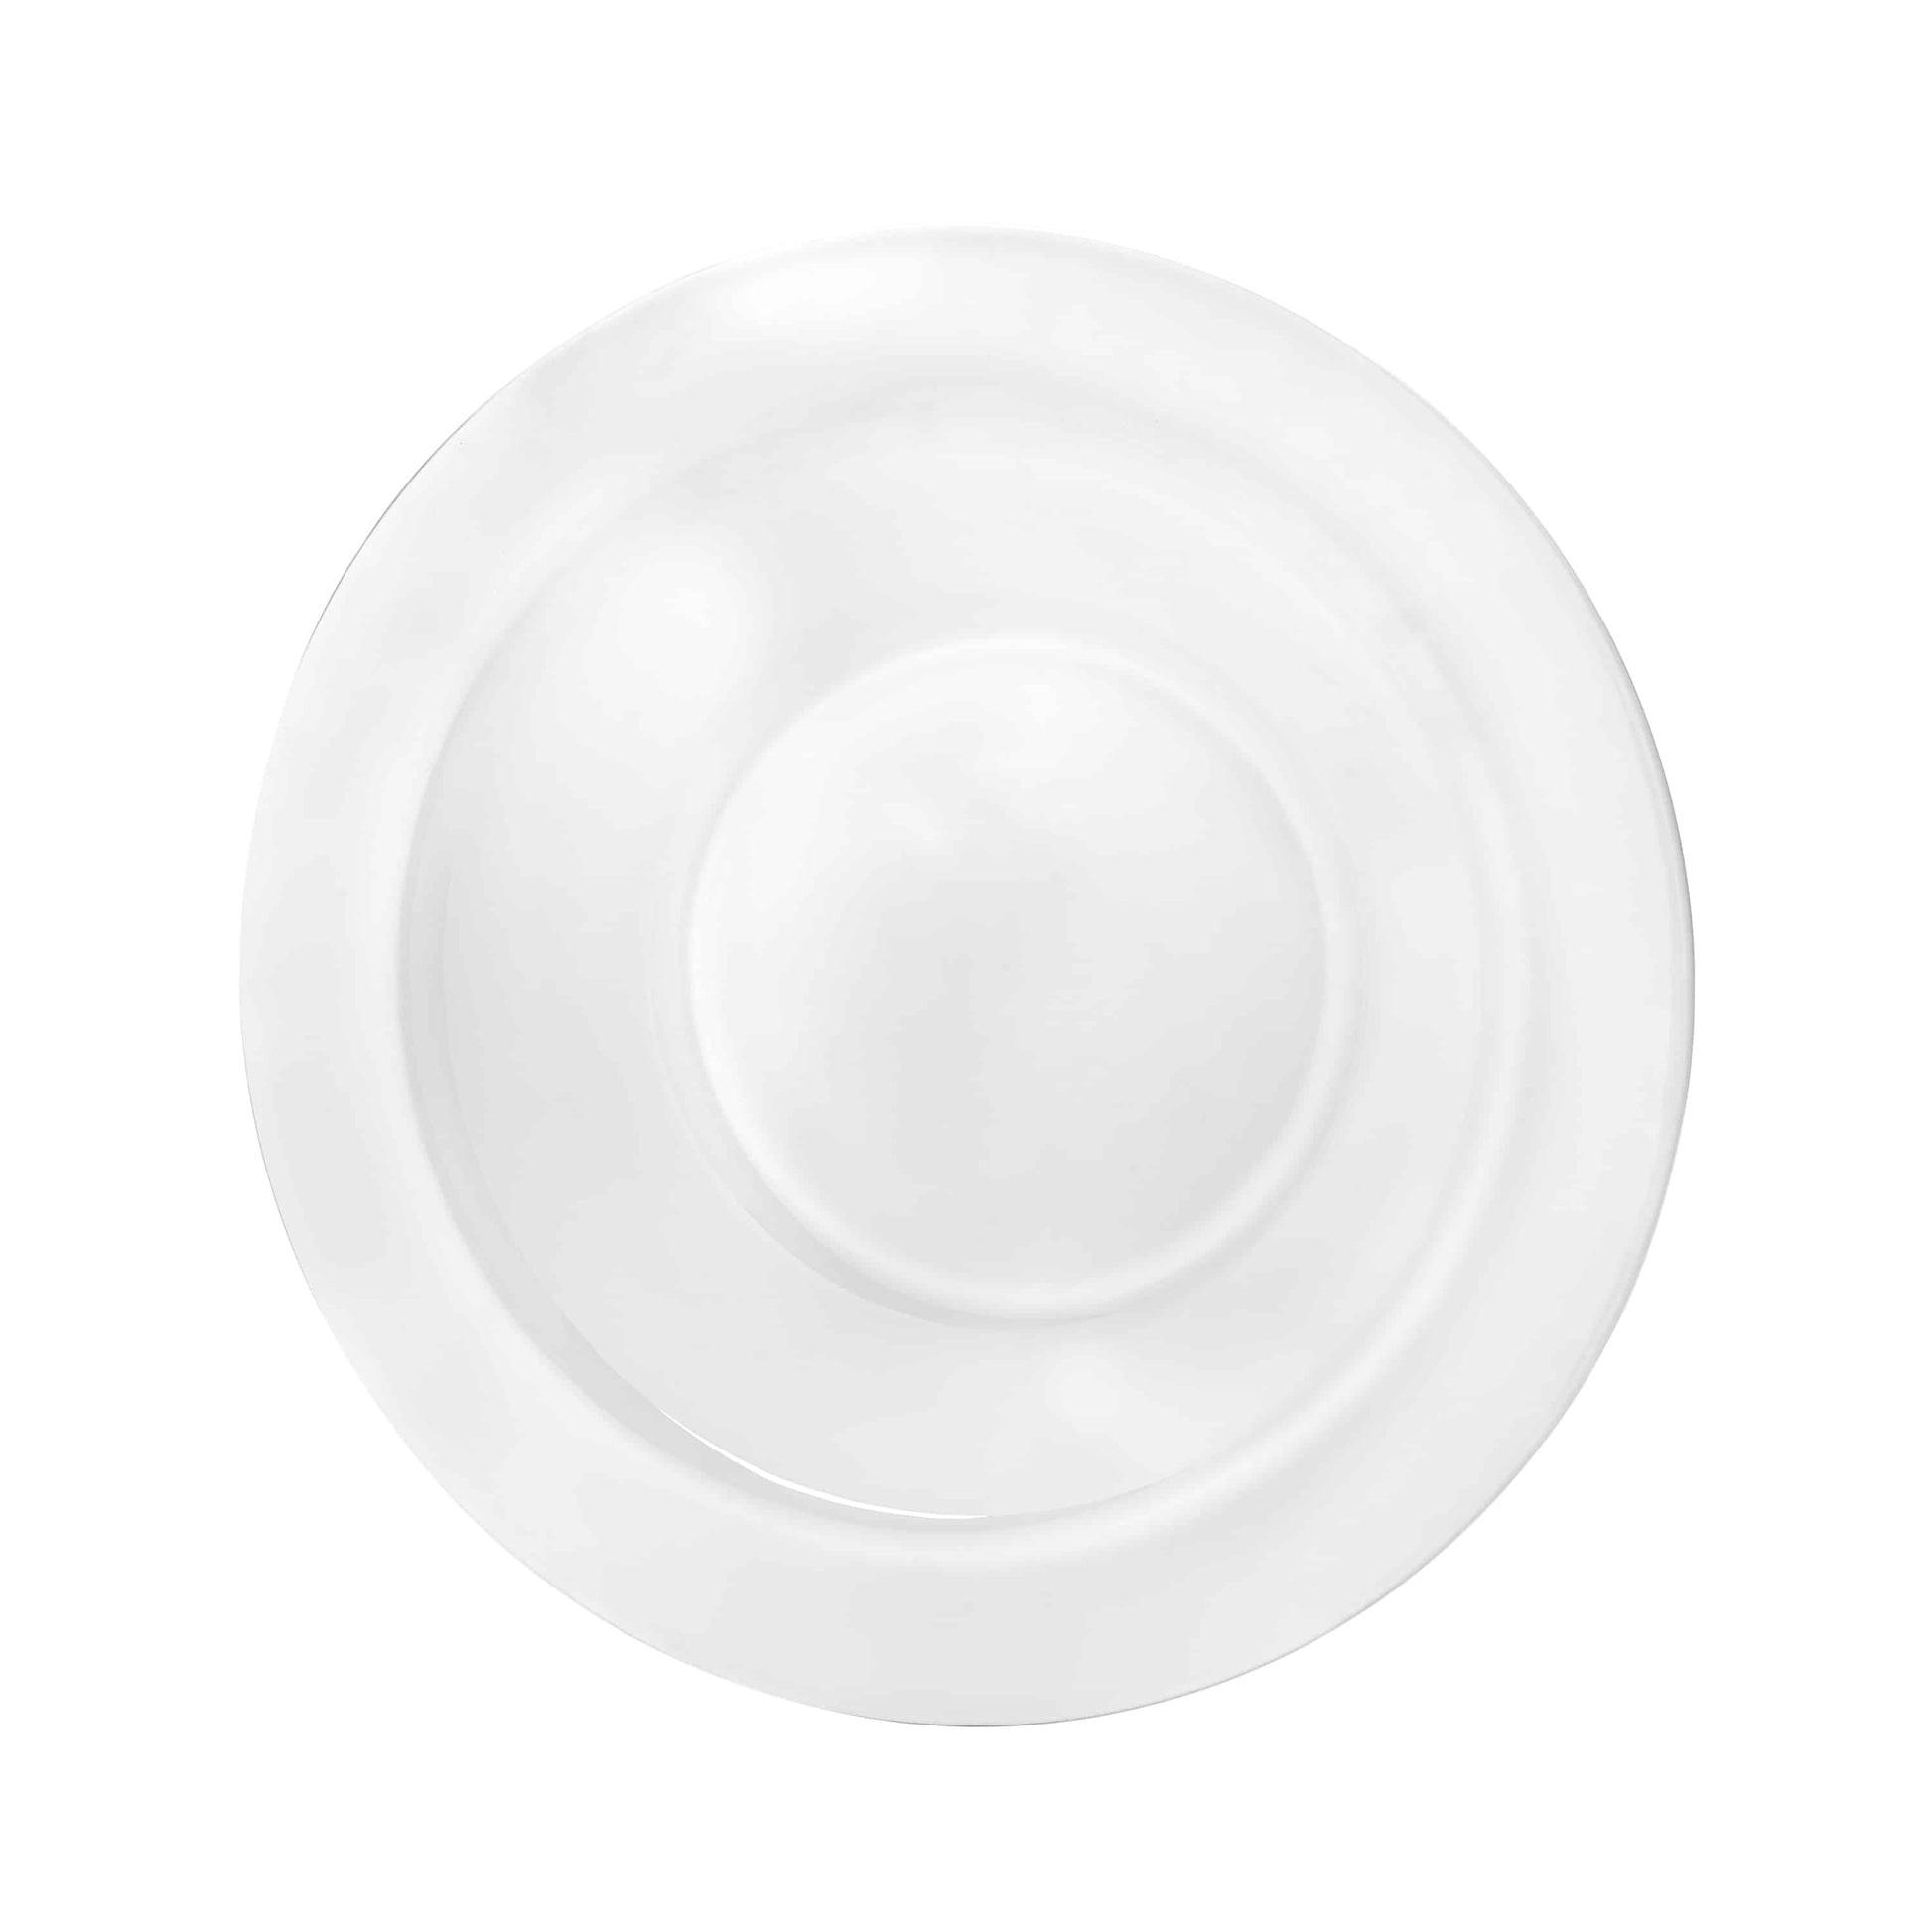 Magnificence Premium Plastic Round Dinnerware - white bowl